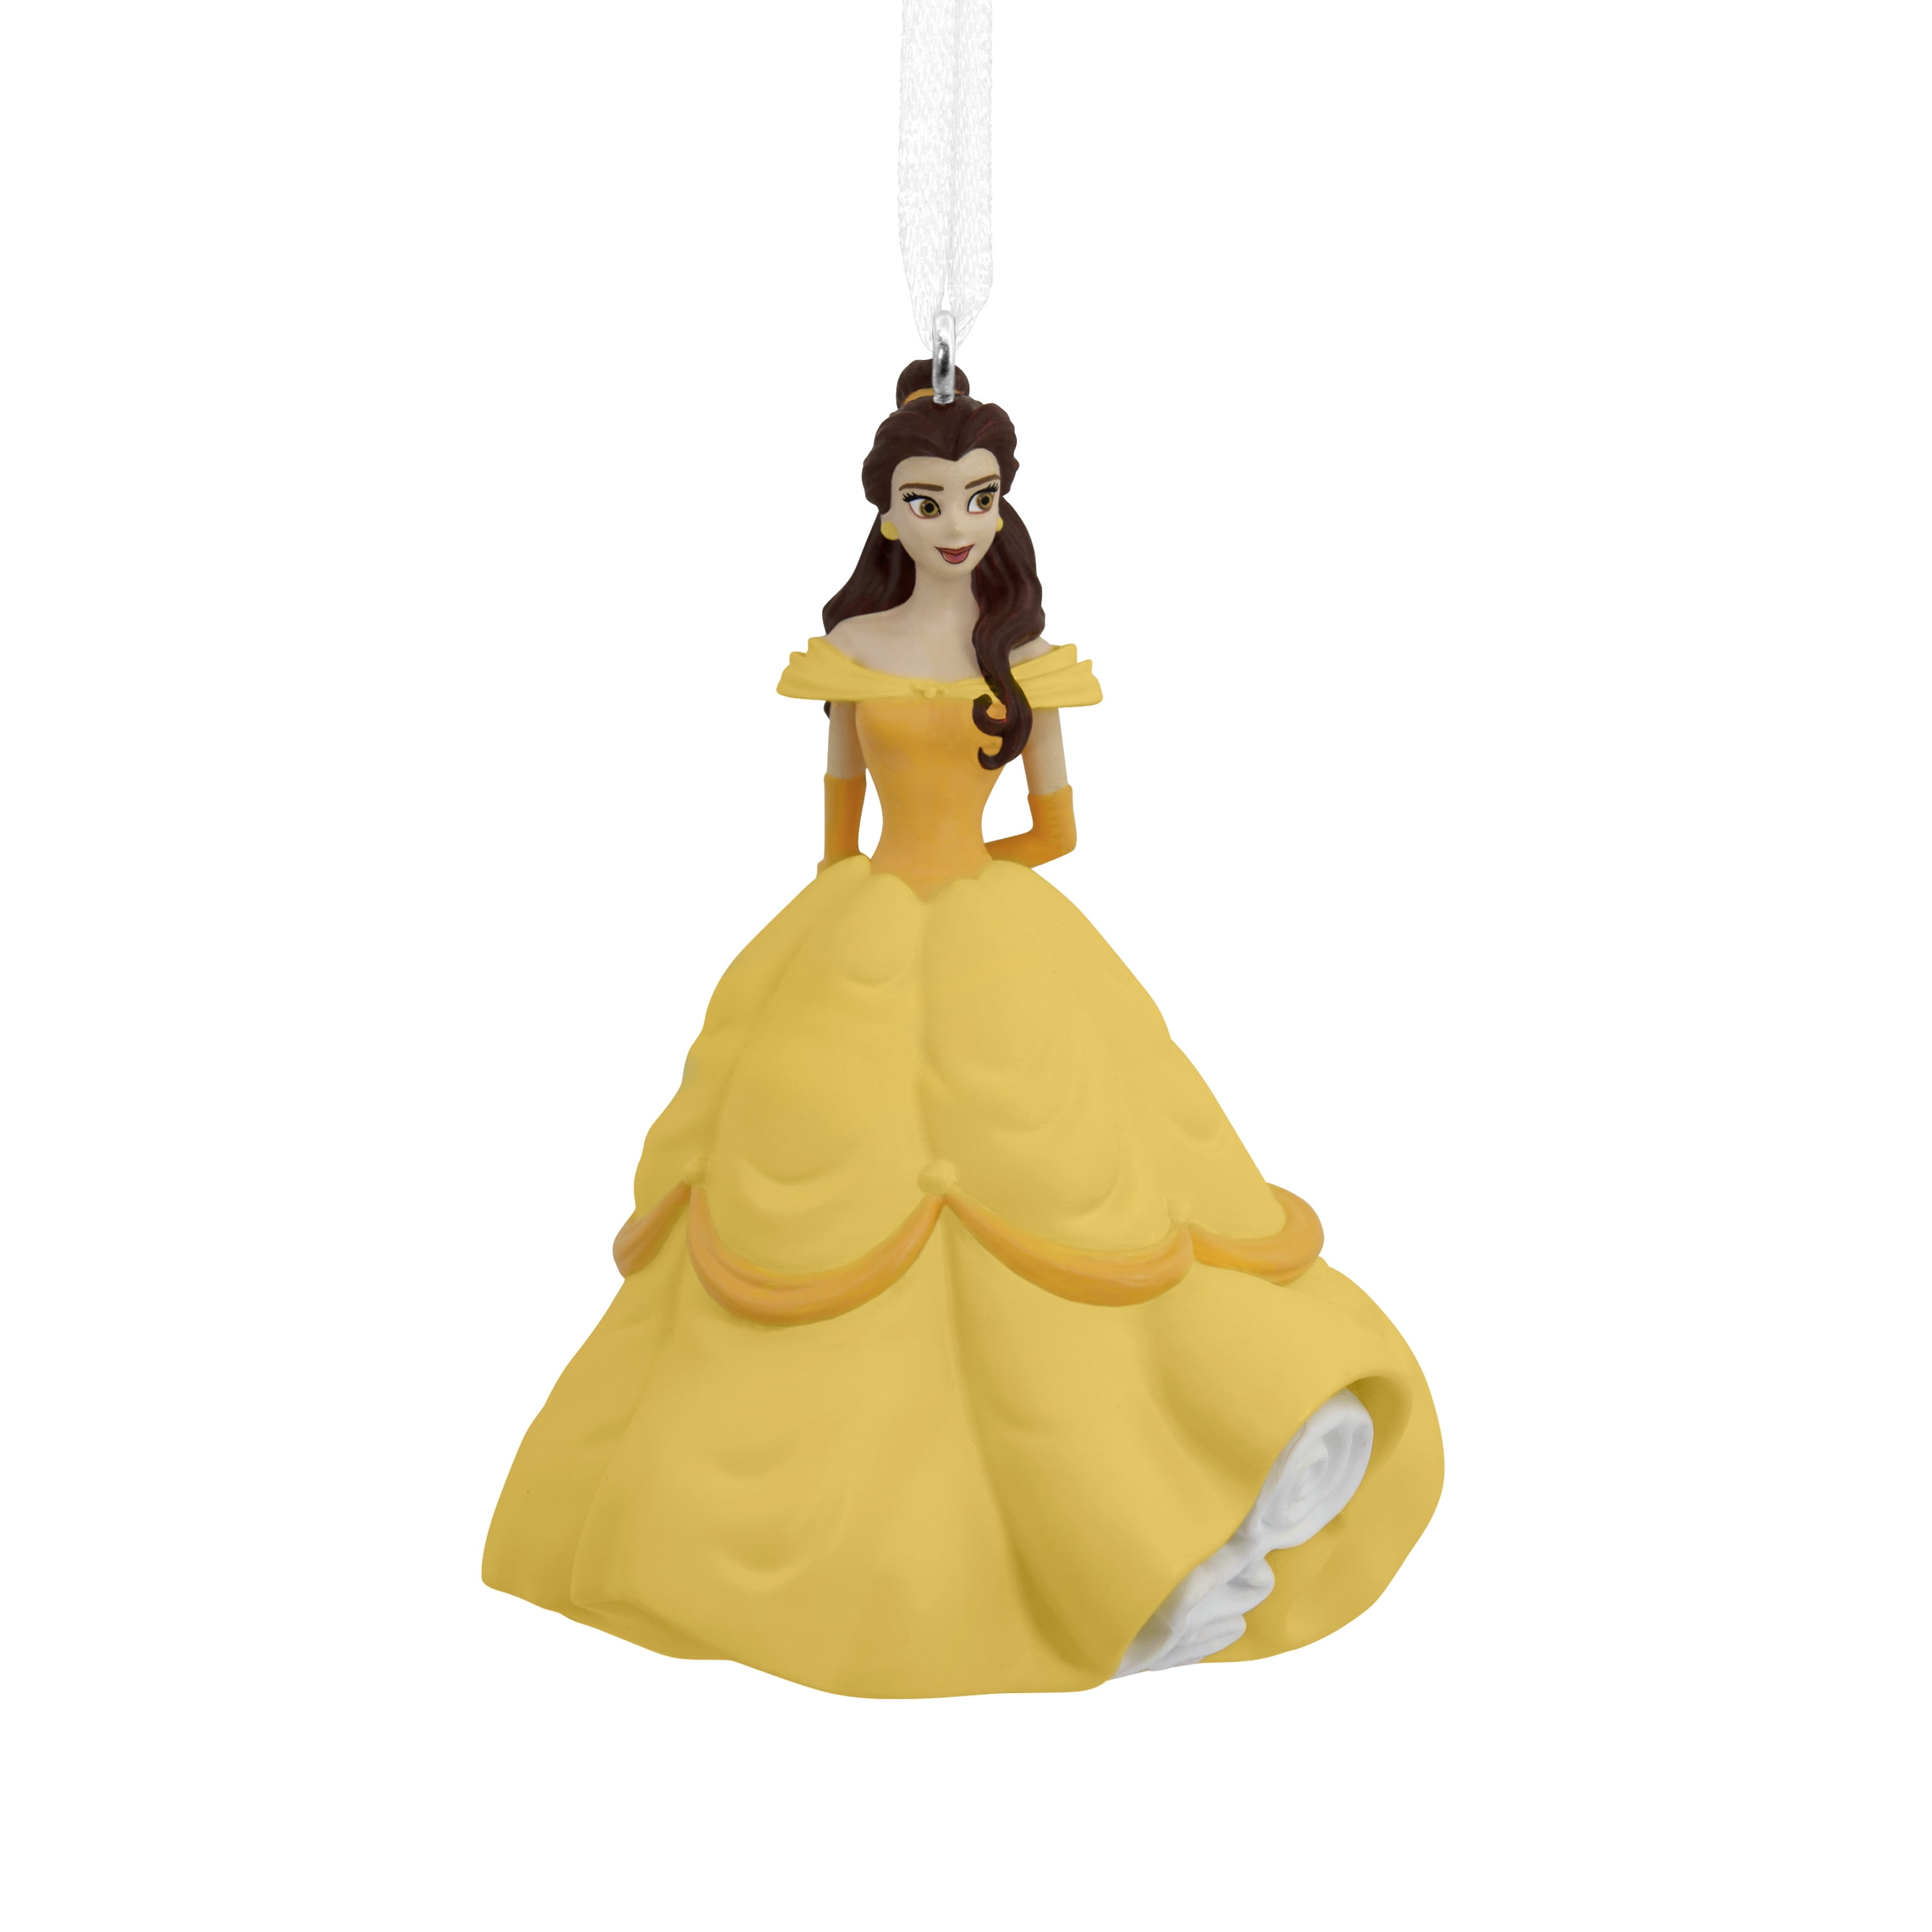 Hallmark Ornament (Disney Beauty and the Beast Belle)